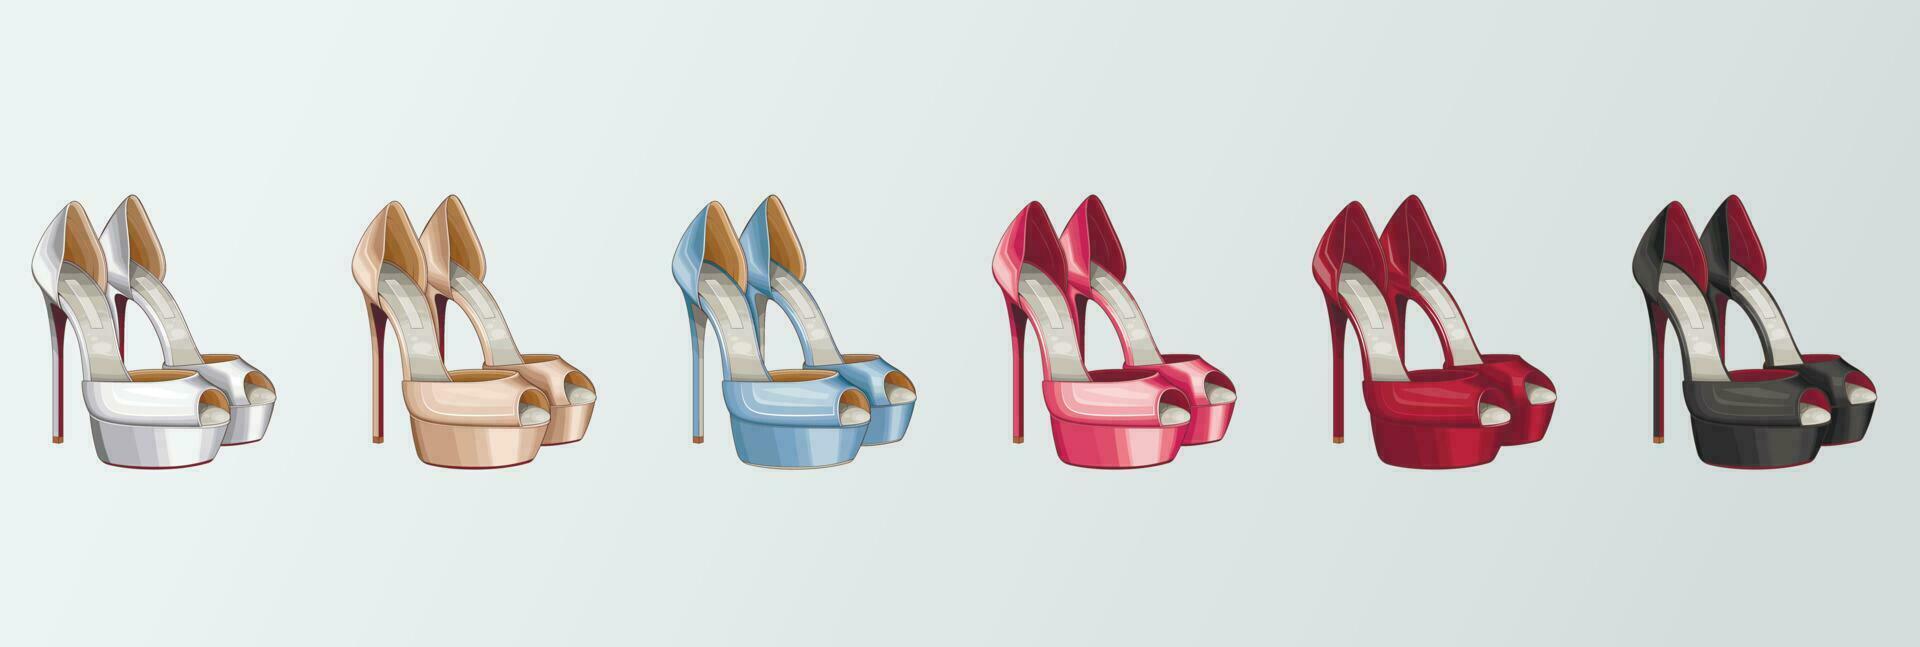 Female High Heels Shoes vector